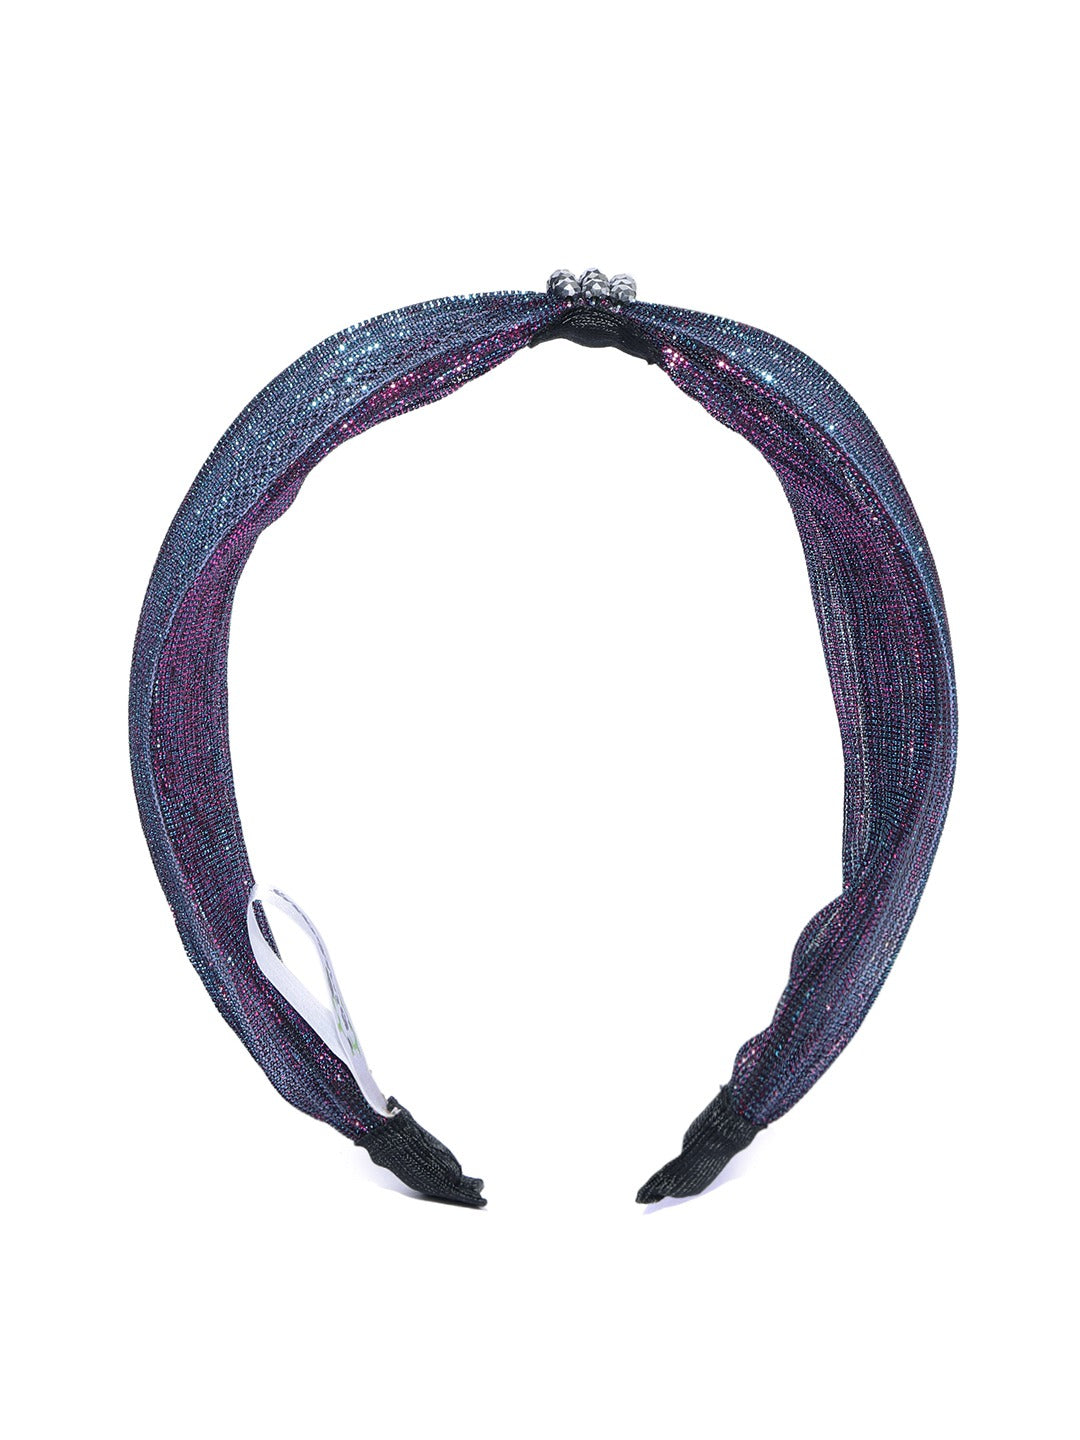 Blueberry Purple simar fabric beaded hair band